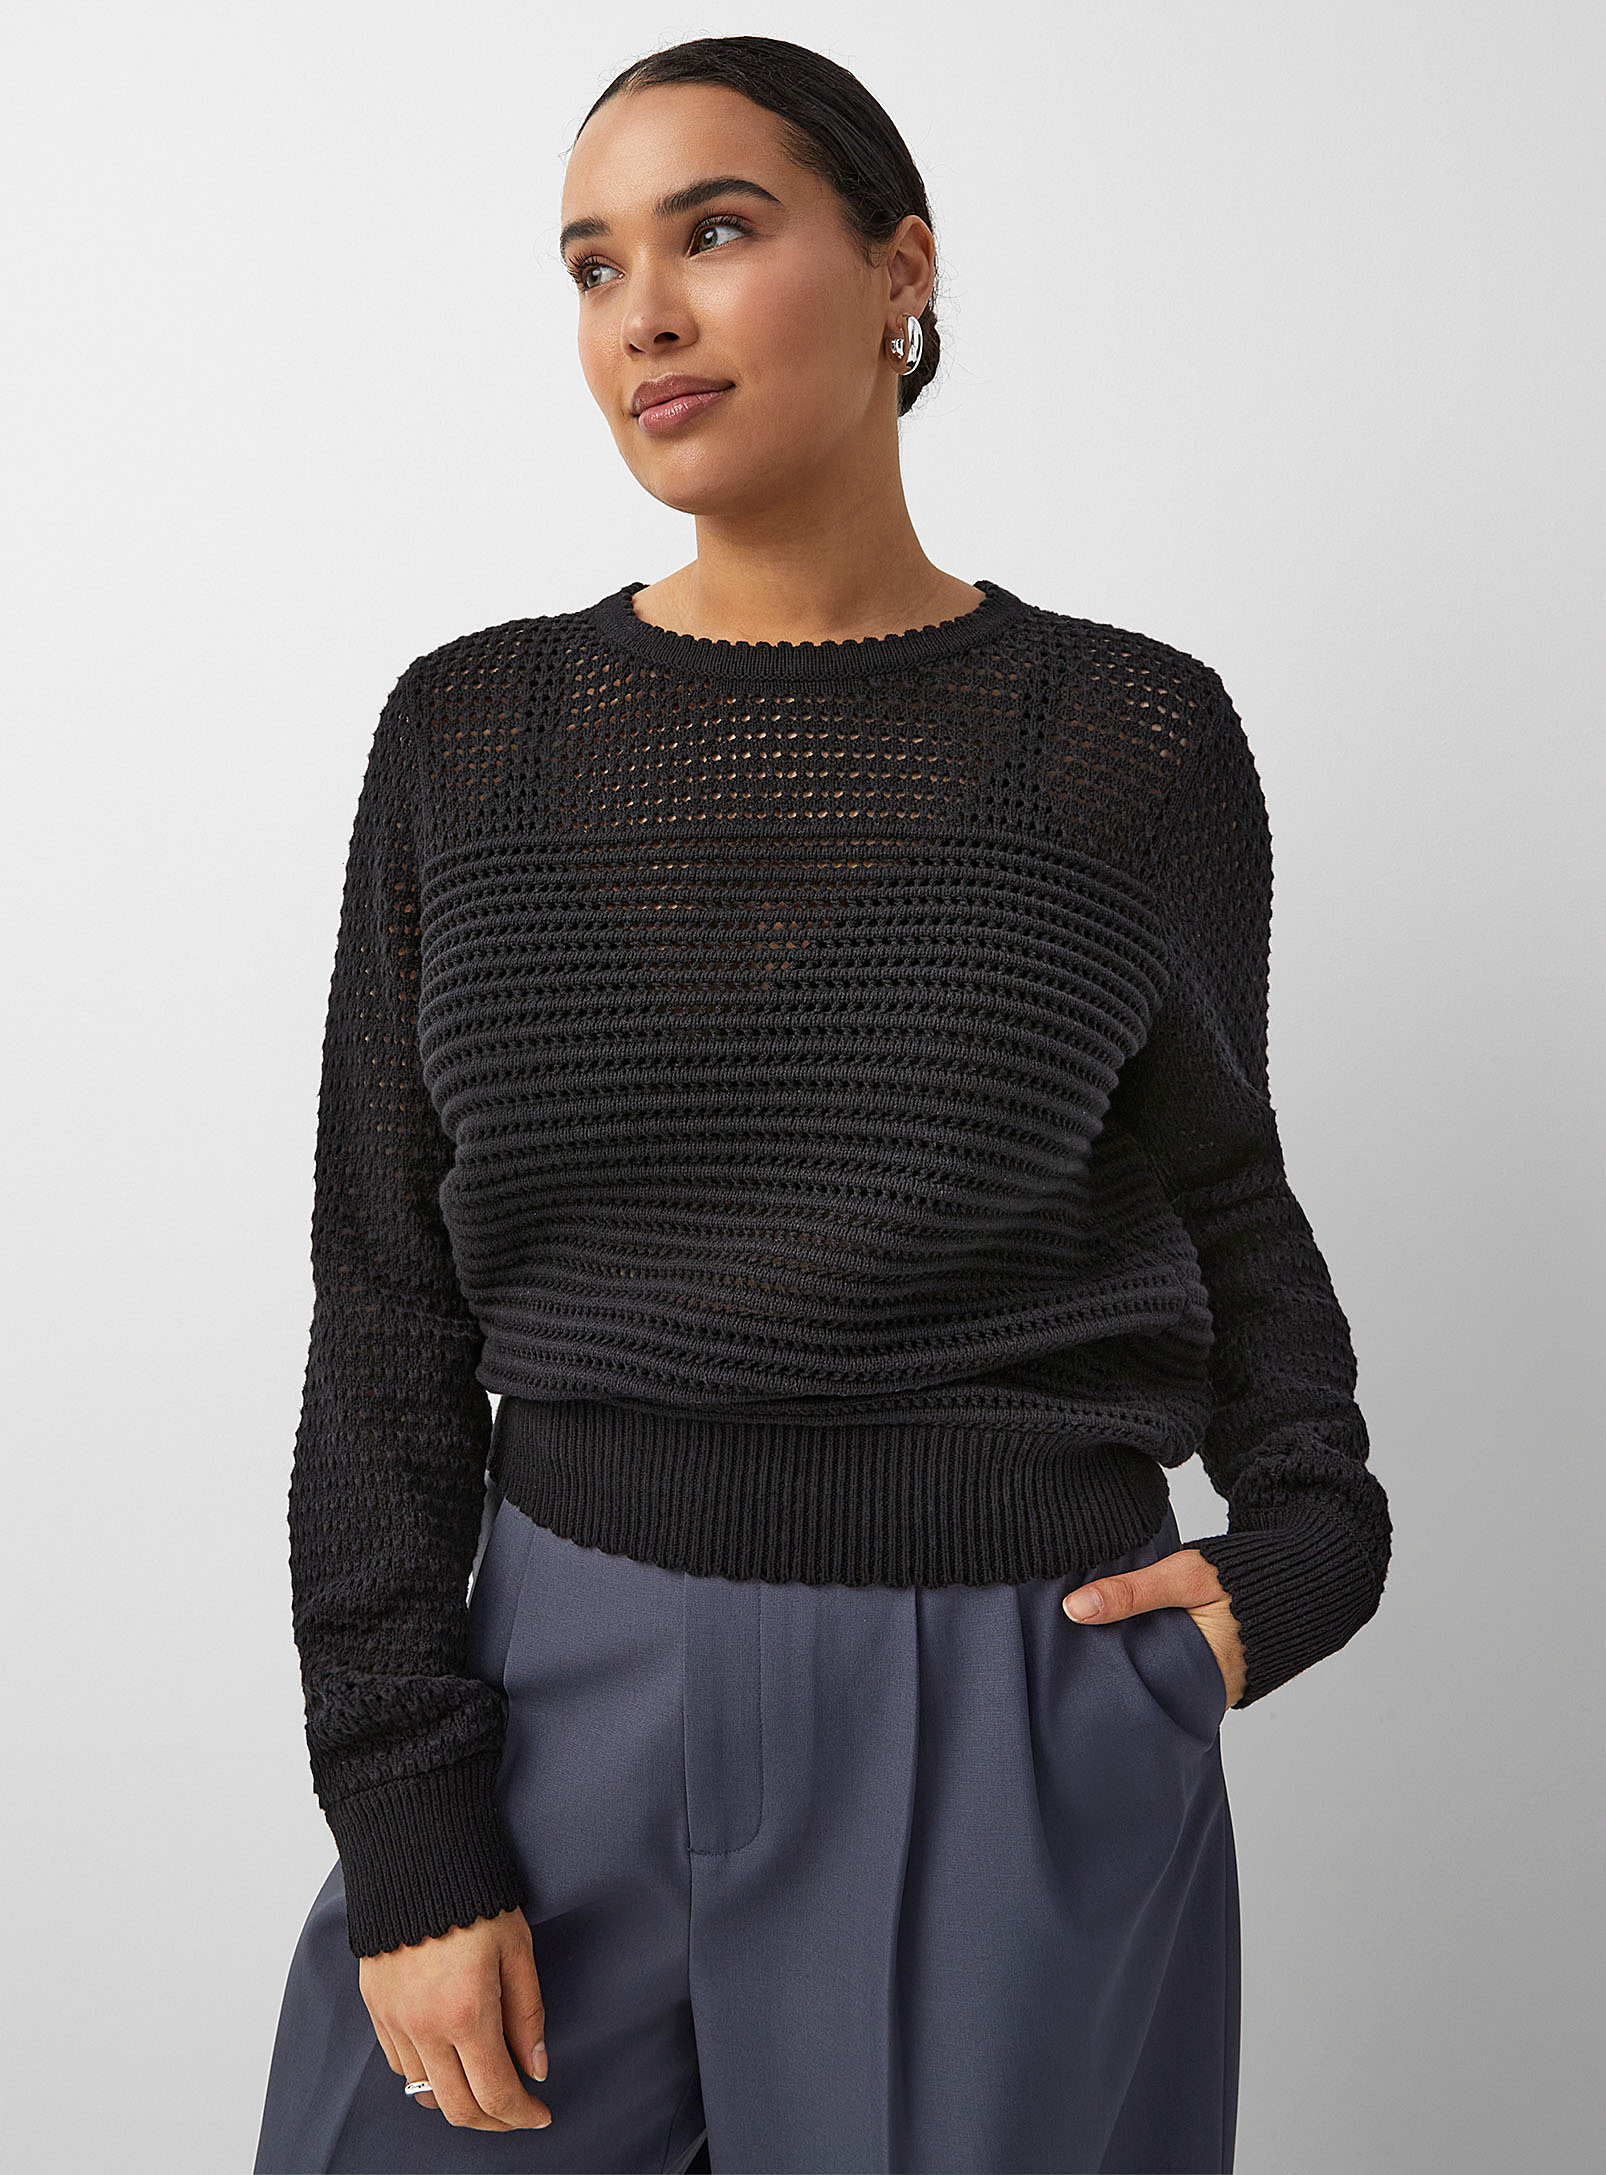 Contemporaine Scalloped Edging Textured Sweater In Black